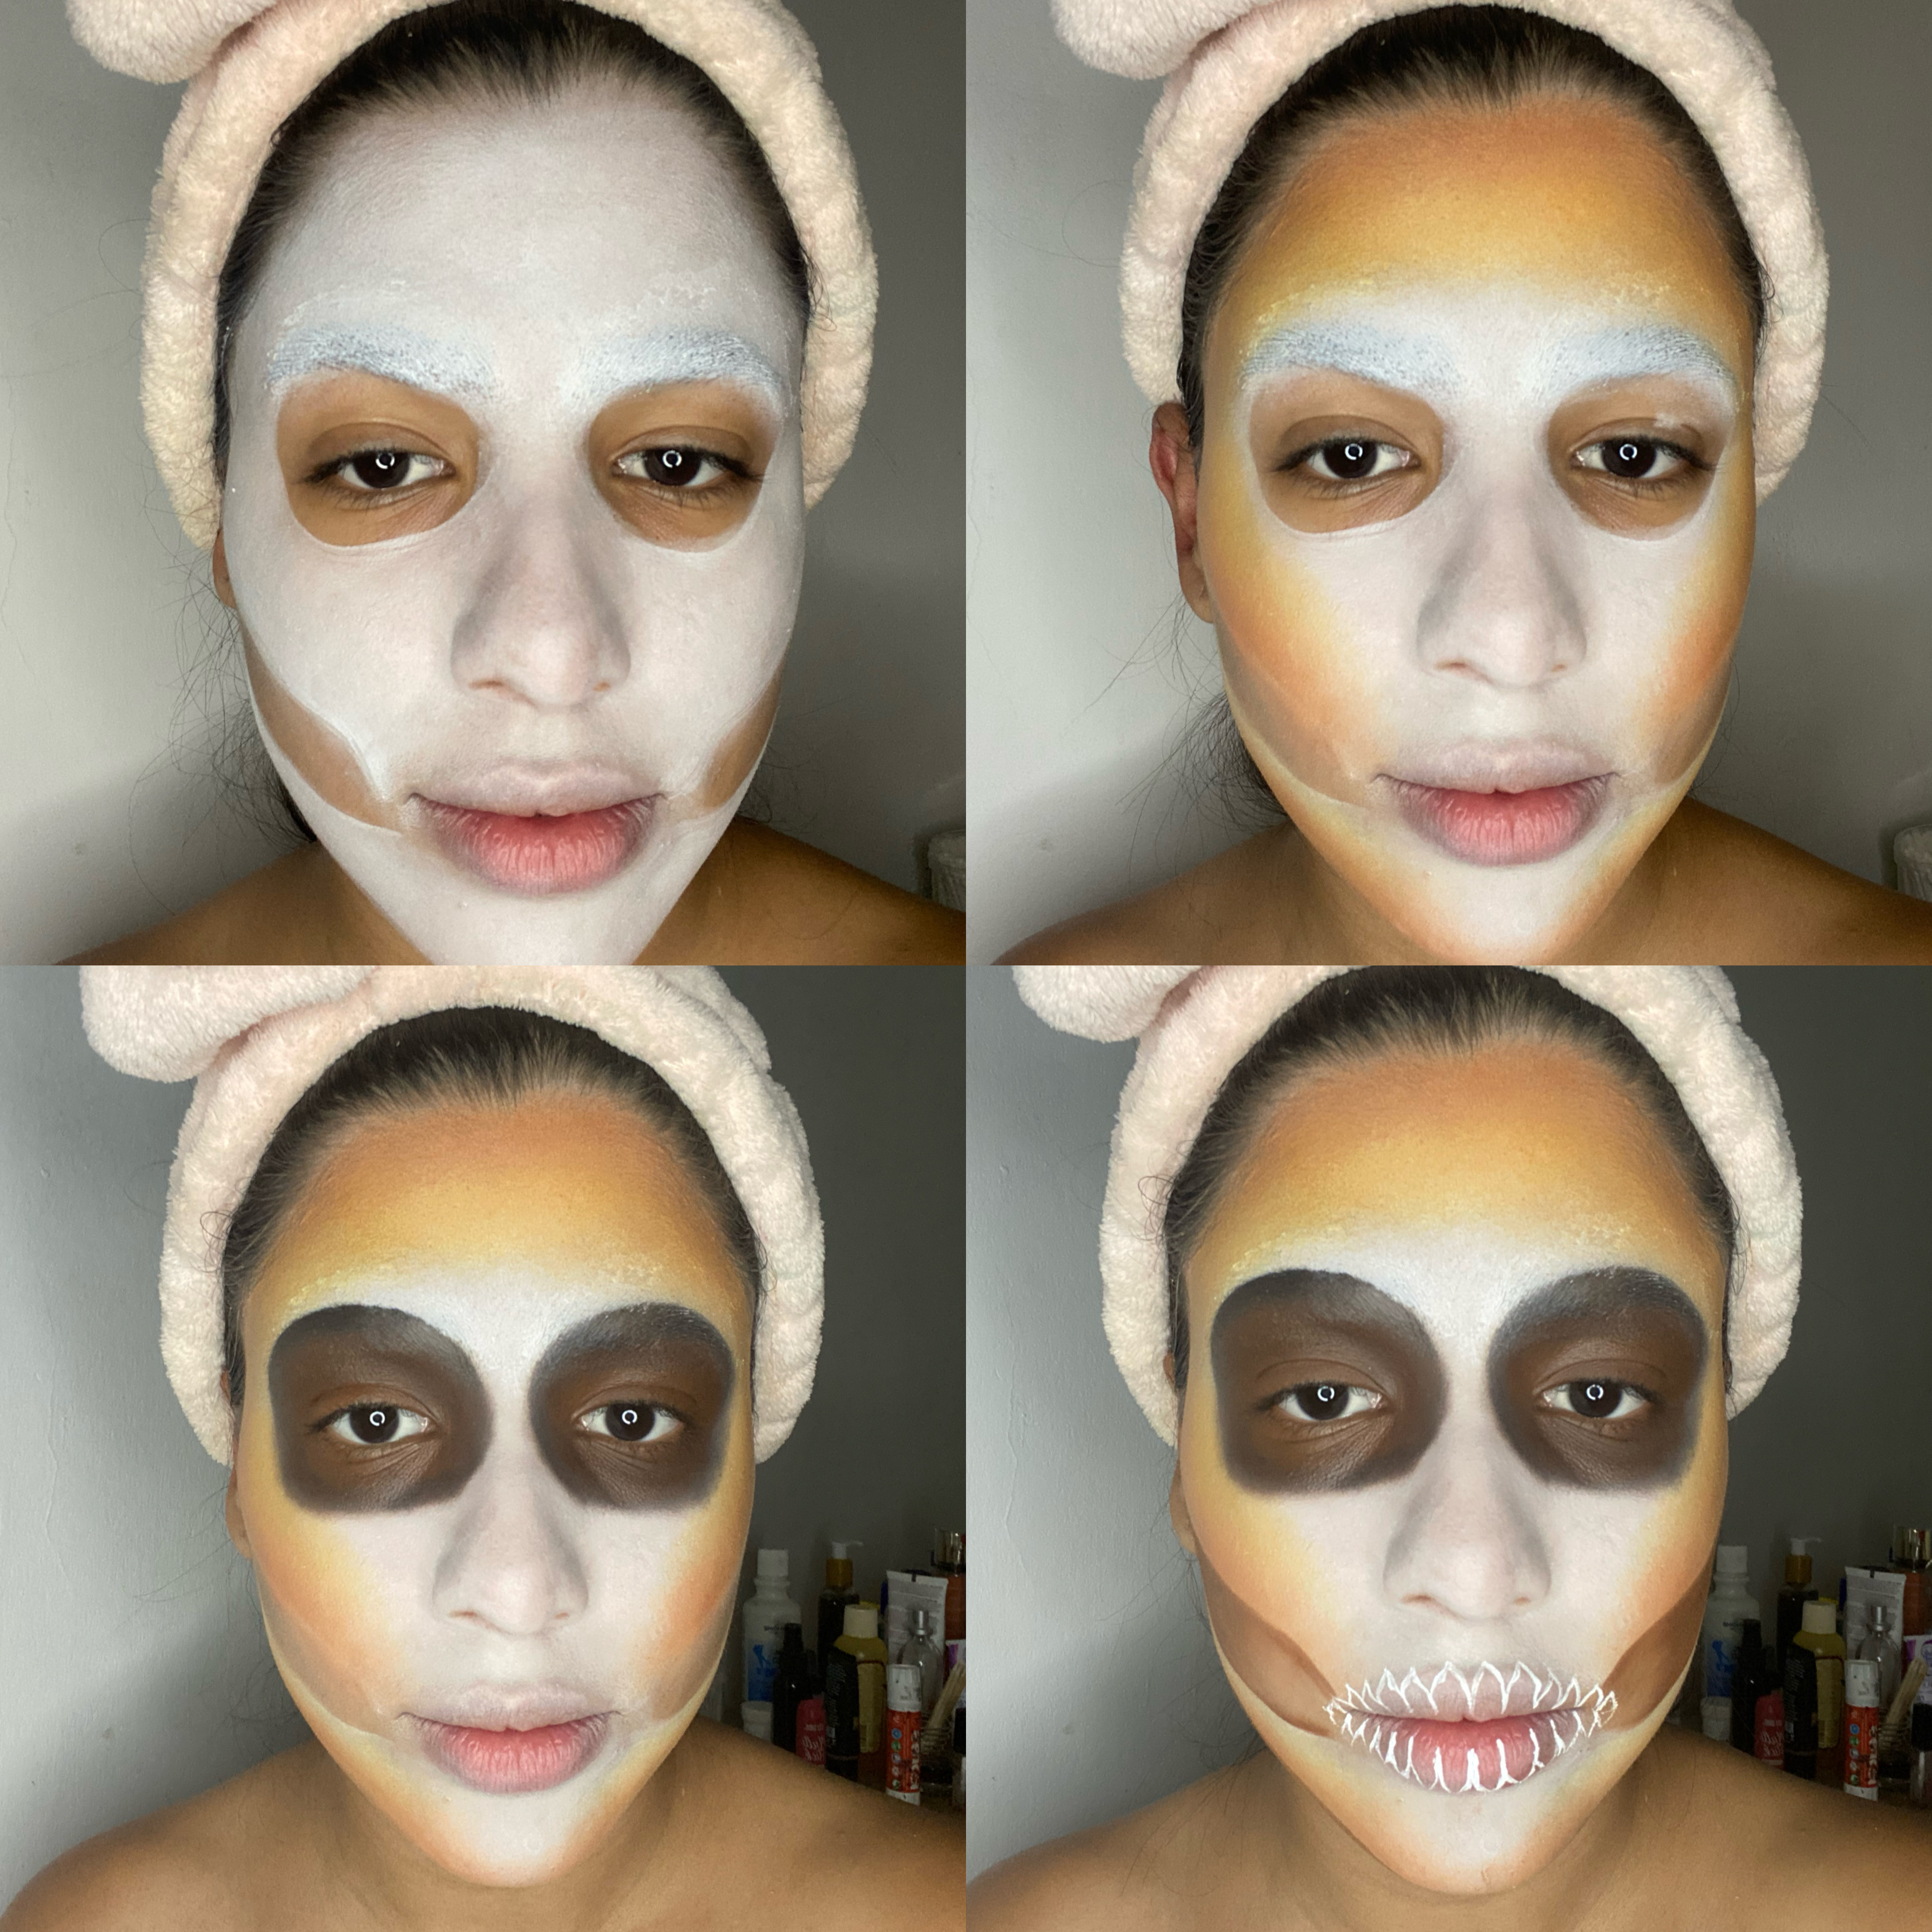 ESP-ENG] Iniciativa maquillaje de catrina - inspirado en girasoles // Catrina  makeup initiative - inspired by sunflowers // by:@anymakeup — Hive